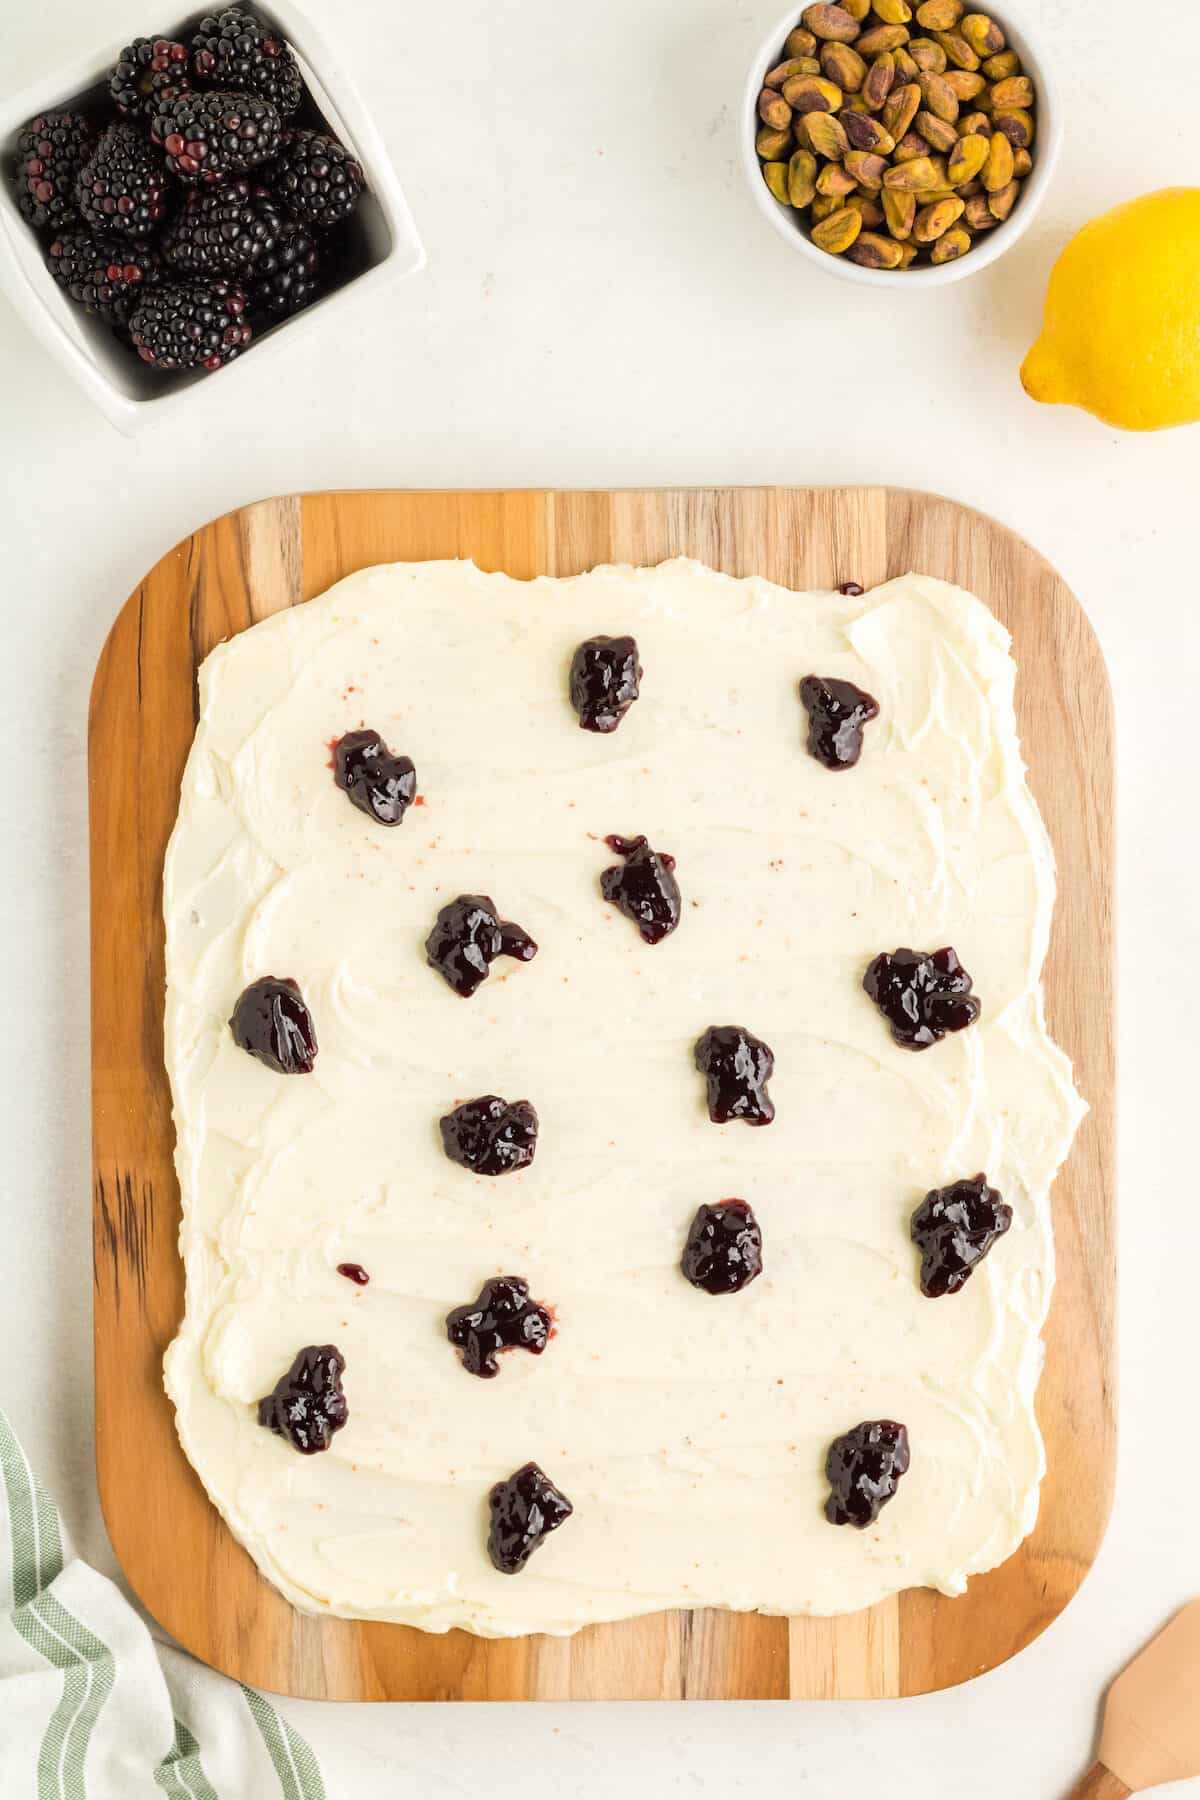 blackberry preserves dolloped over the butter spread.